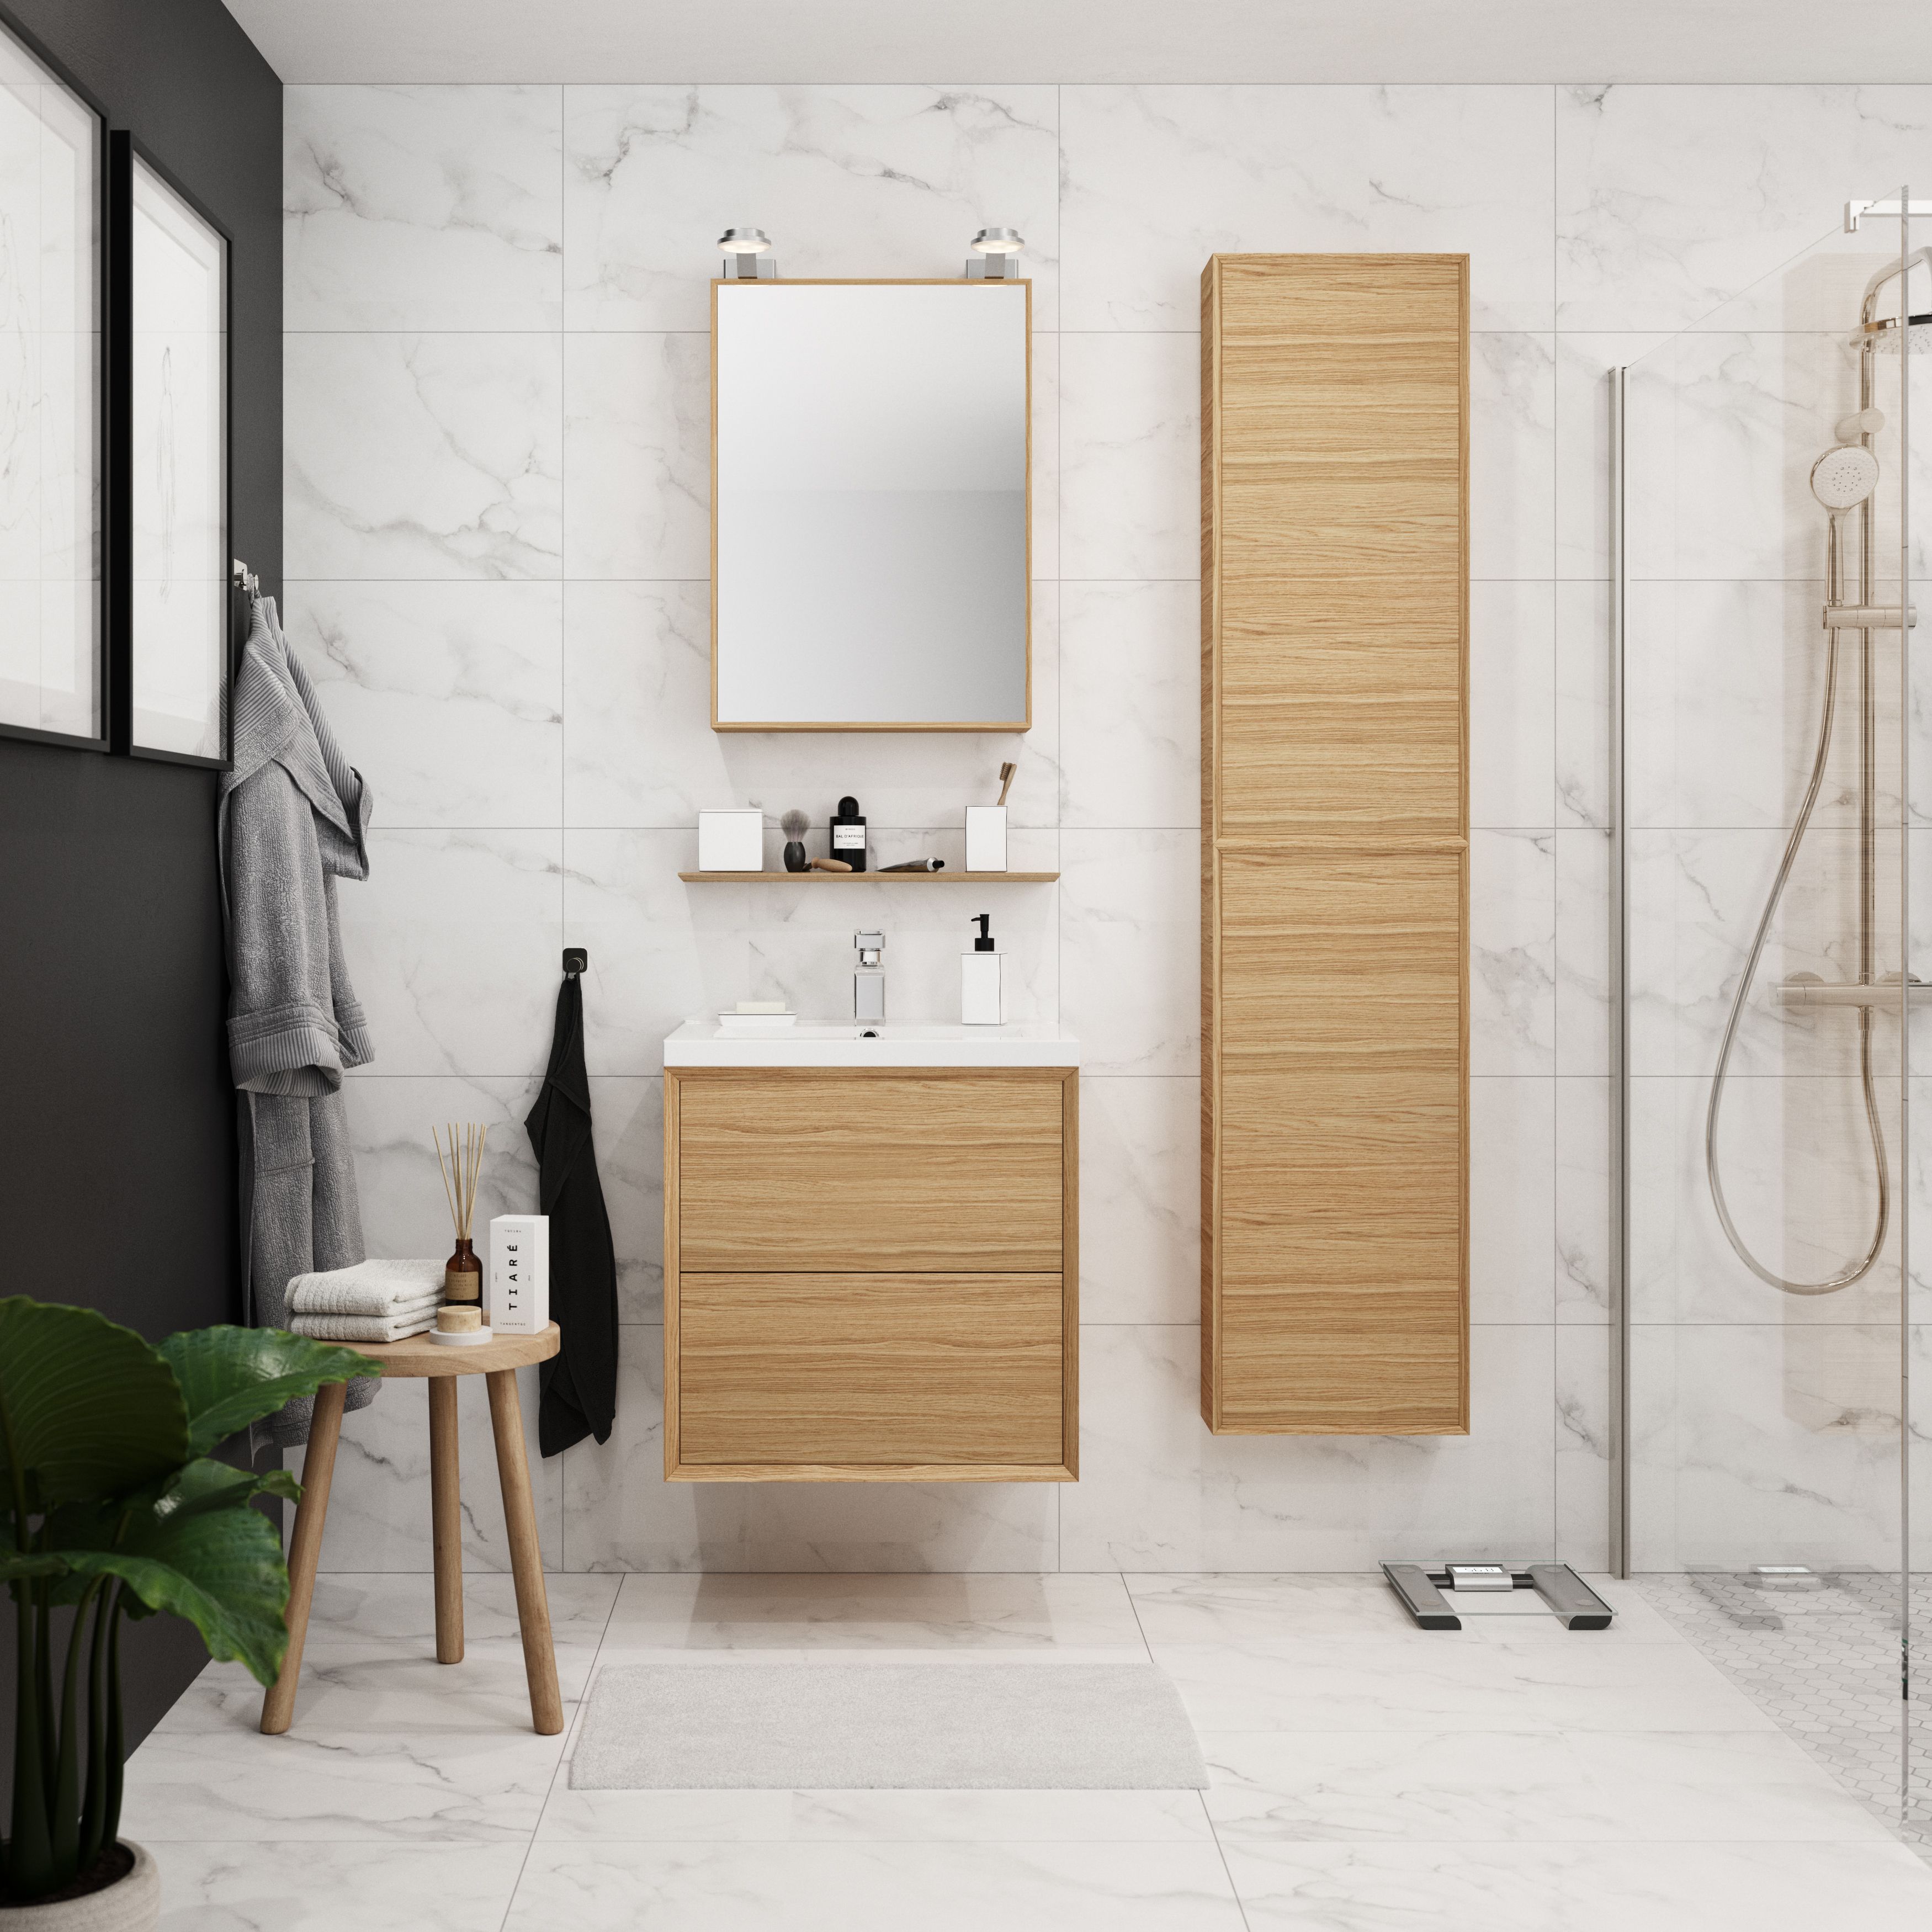 GoodHome Avela Matt Oak Veneer Wall-mounted Bathroom Vanity unit (H) 600mm (W) 600mm